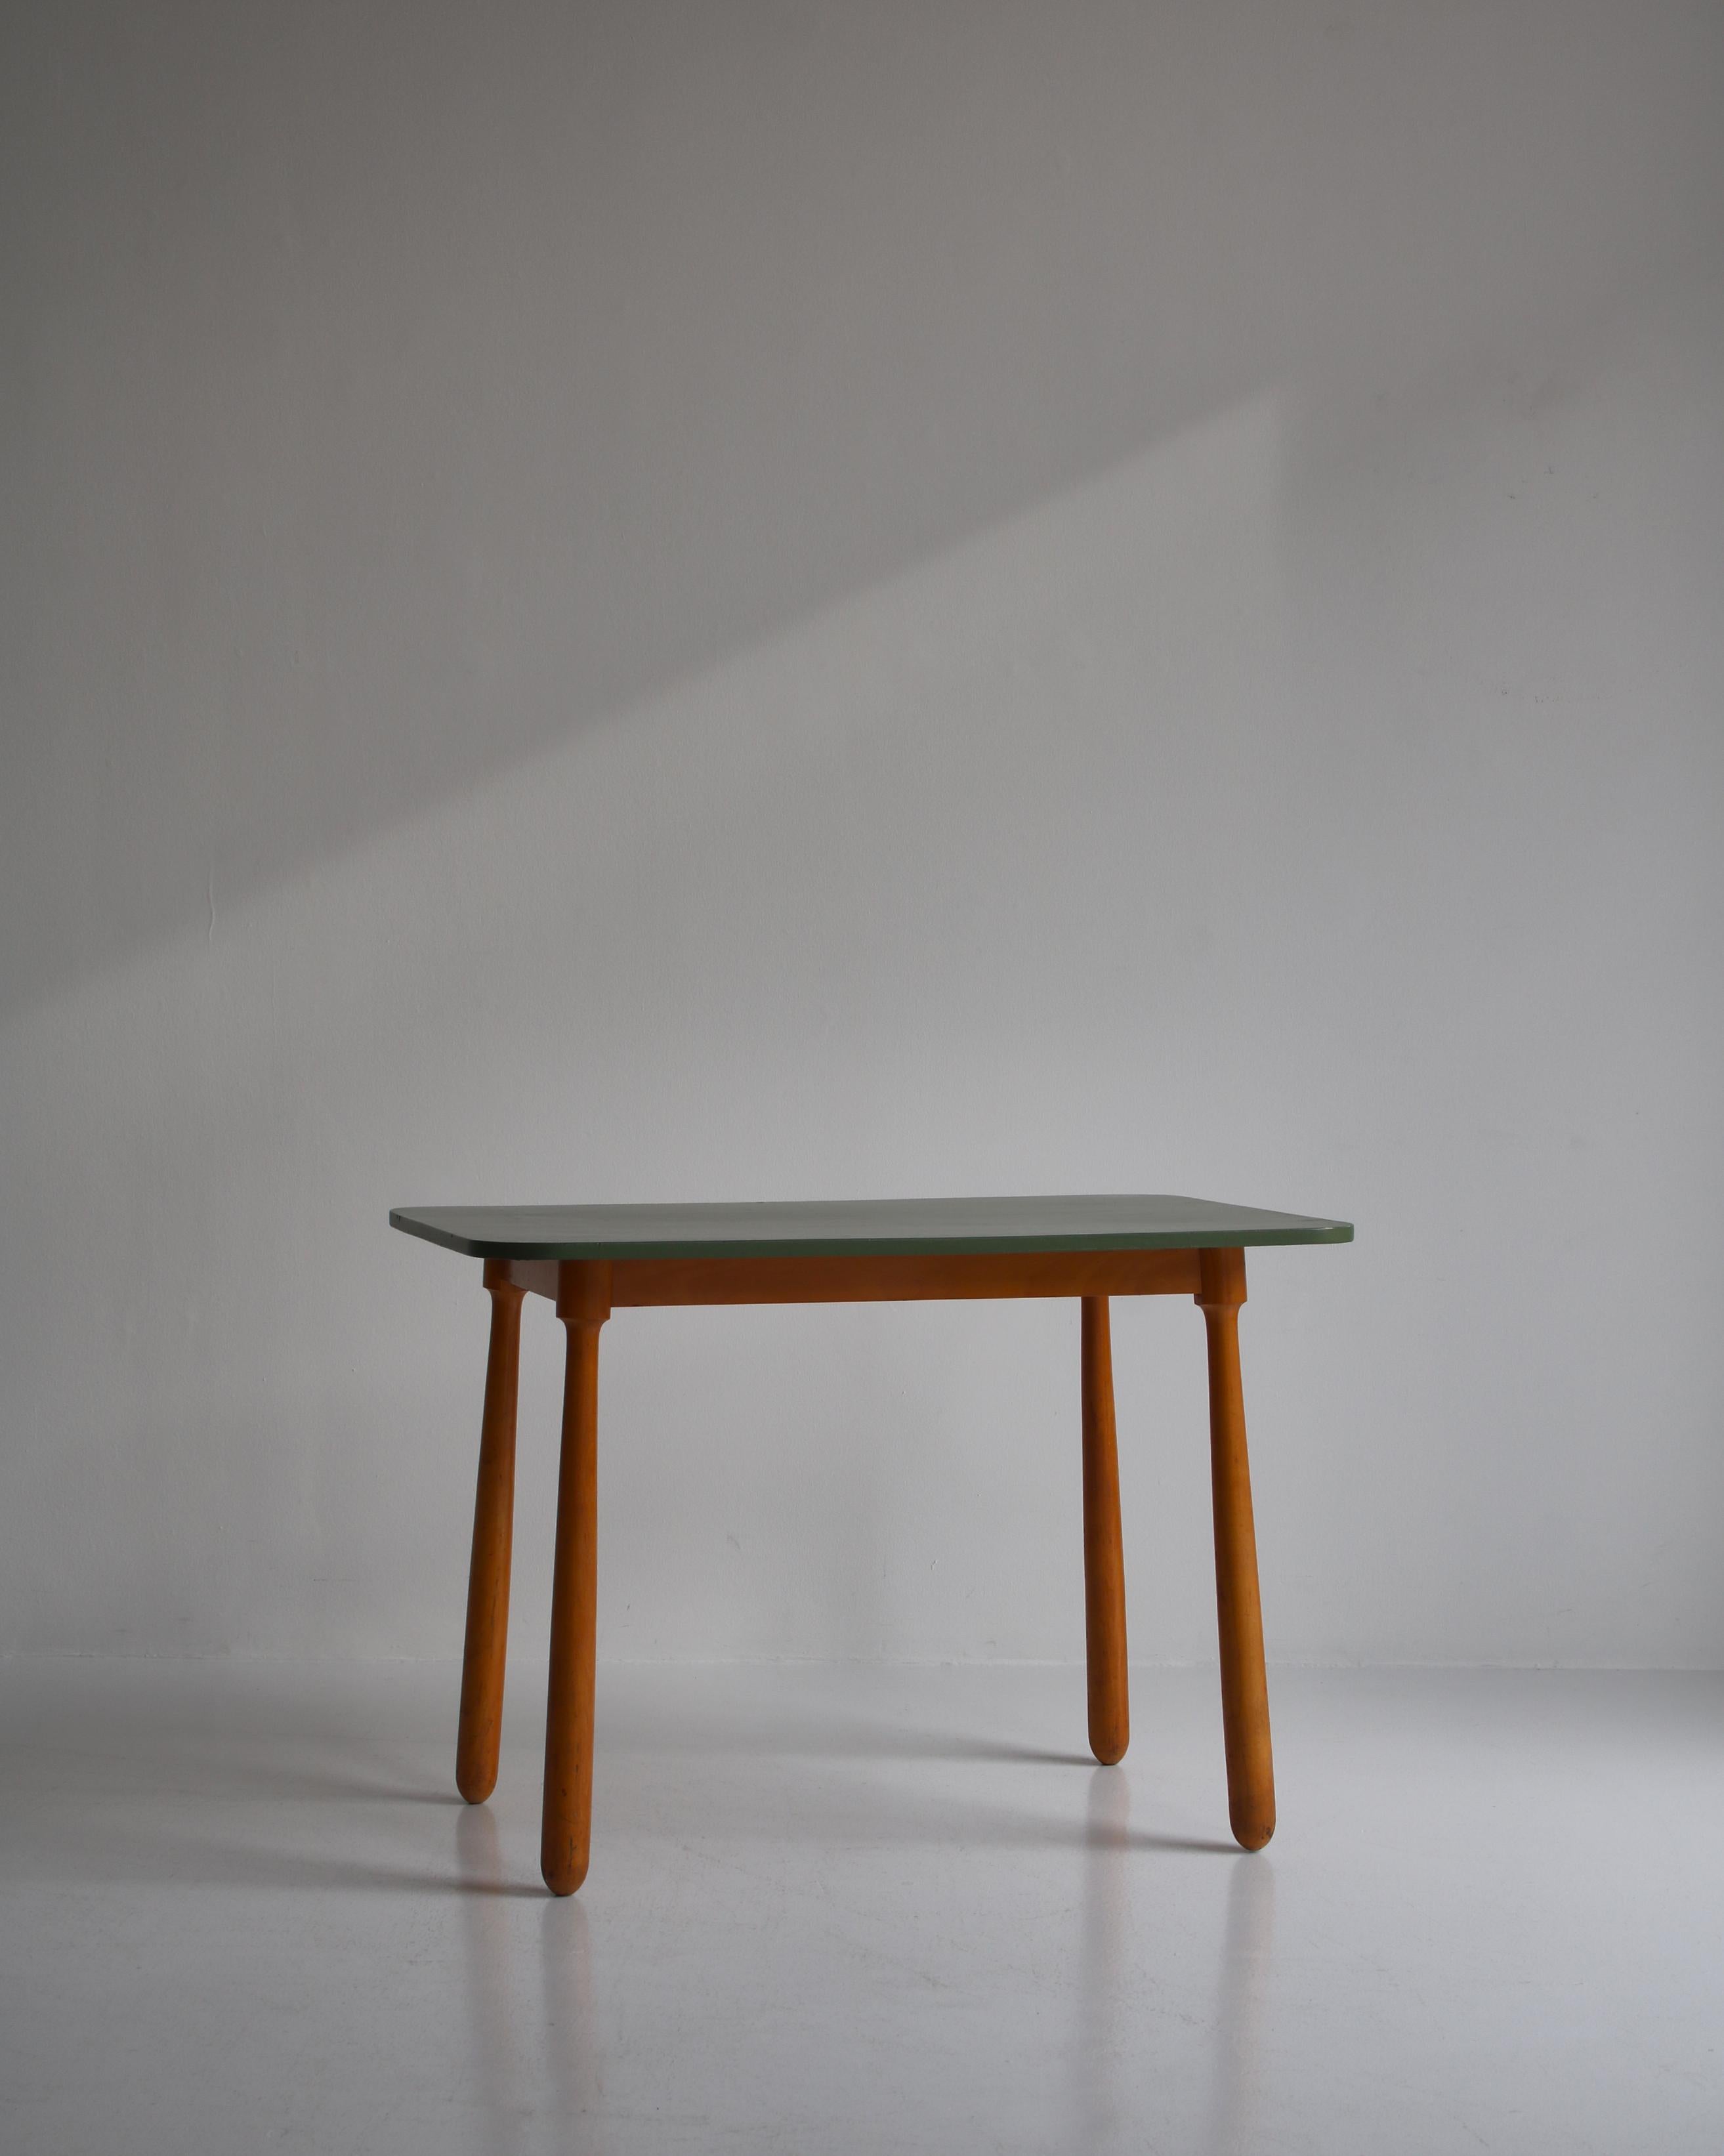 Danish Arnold Madsen Club Legged Desk / Table in Beech, Scandinavian Modern, 1940s For Sale